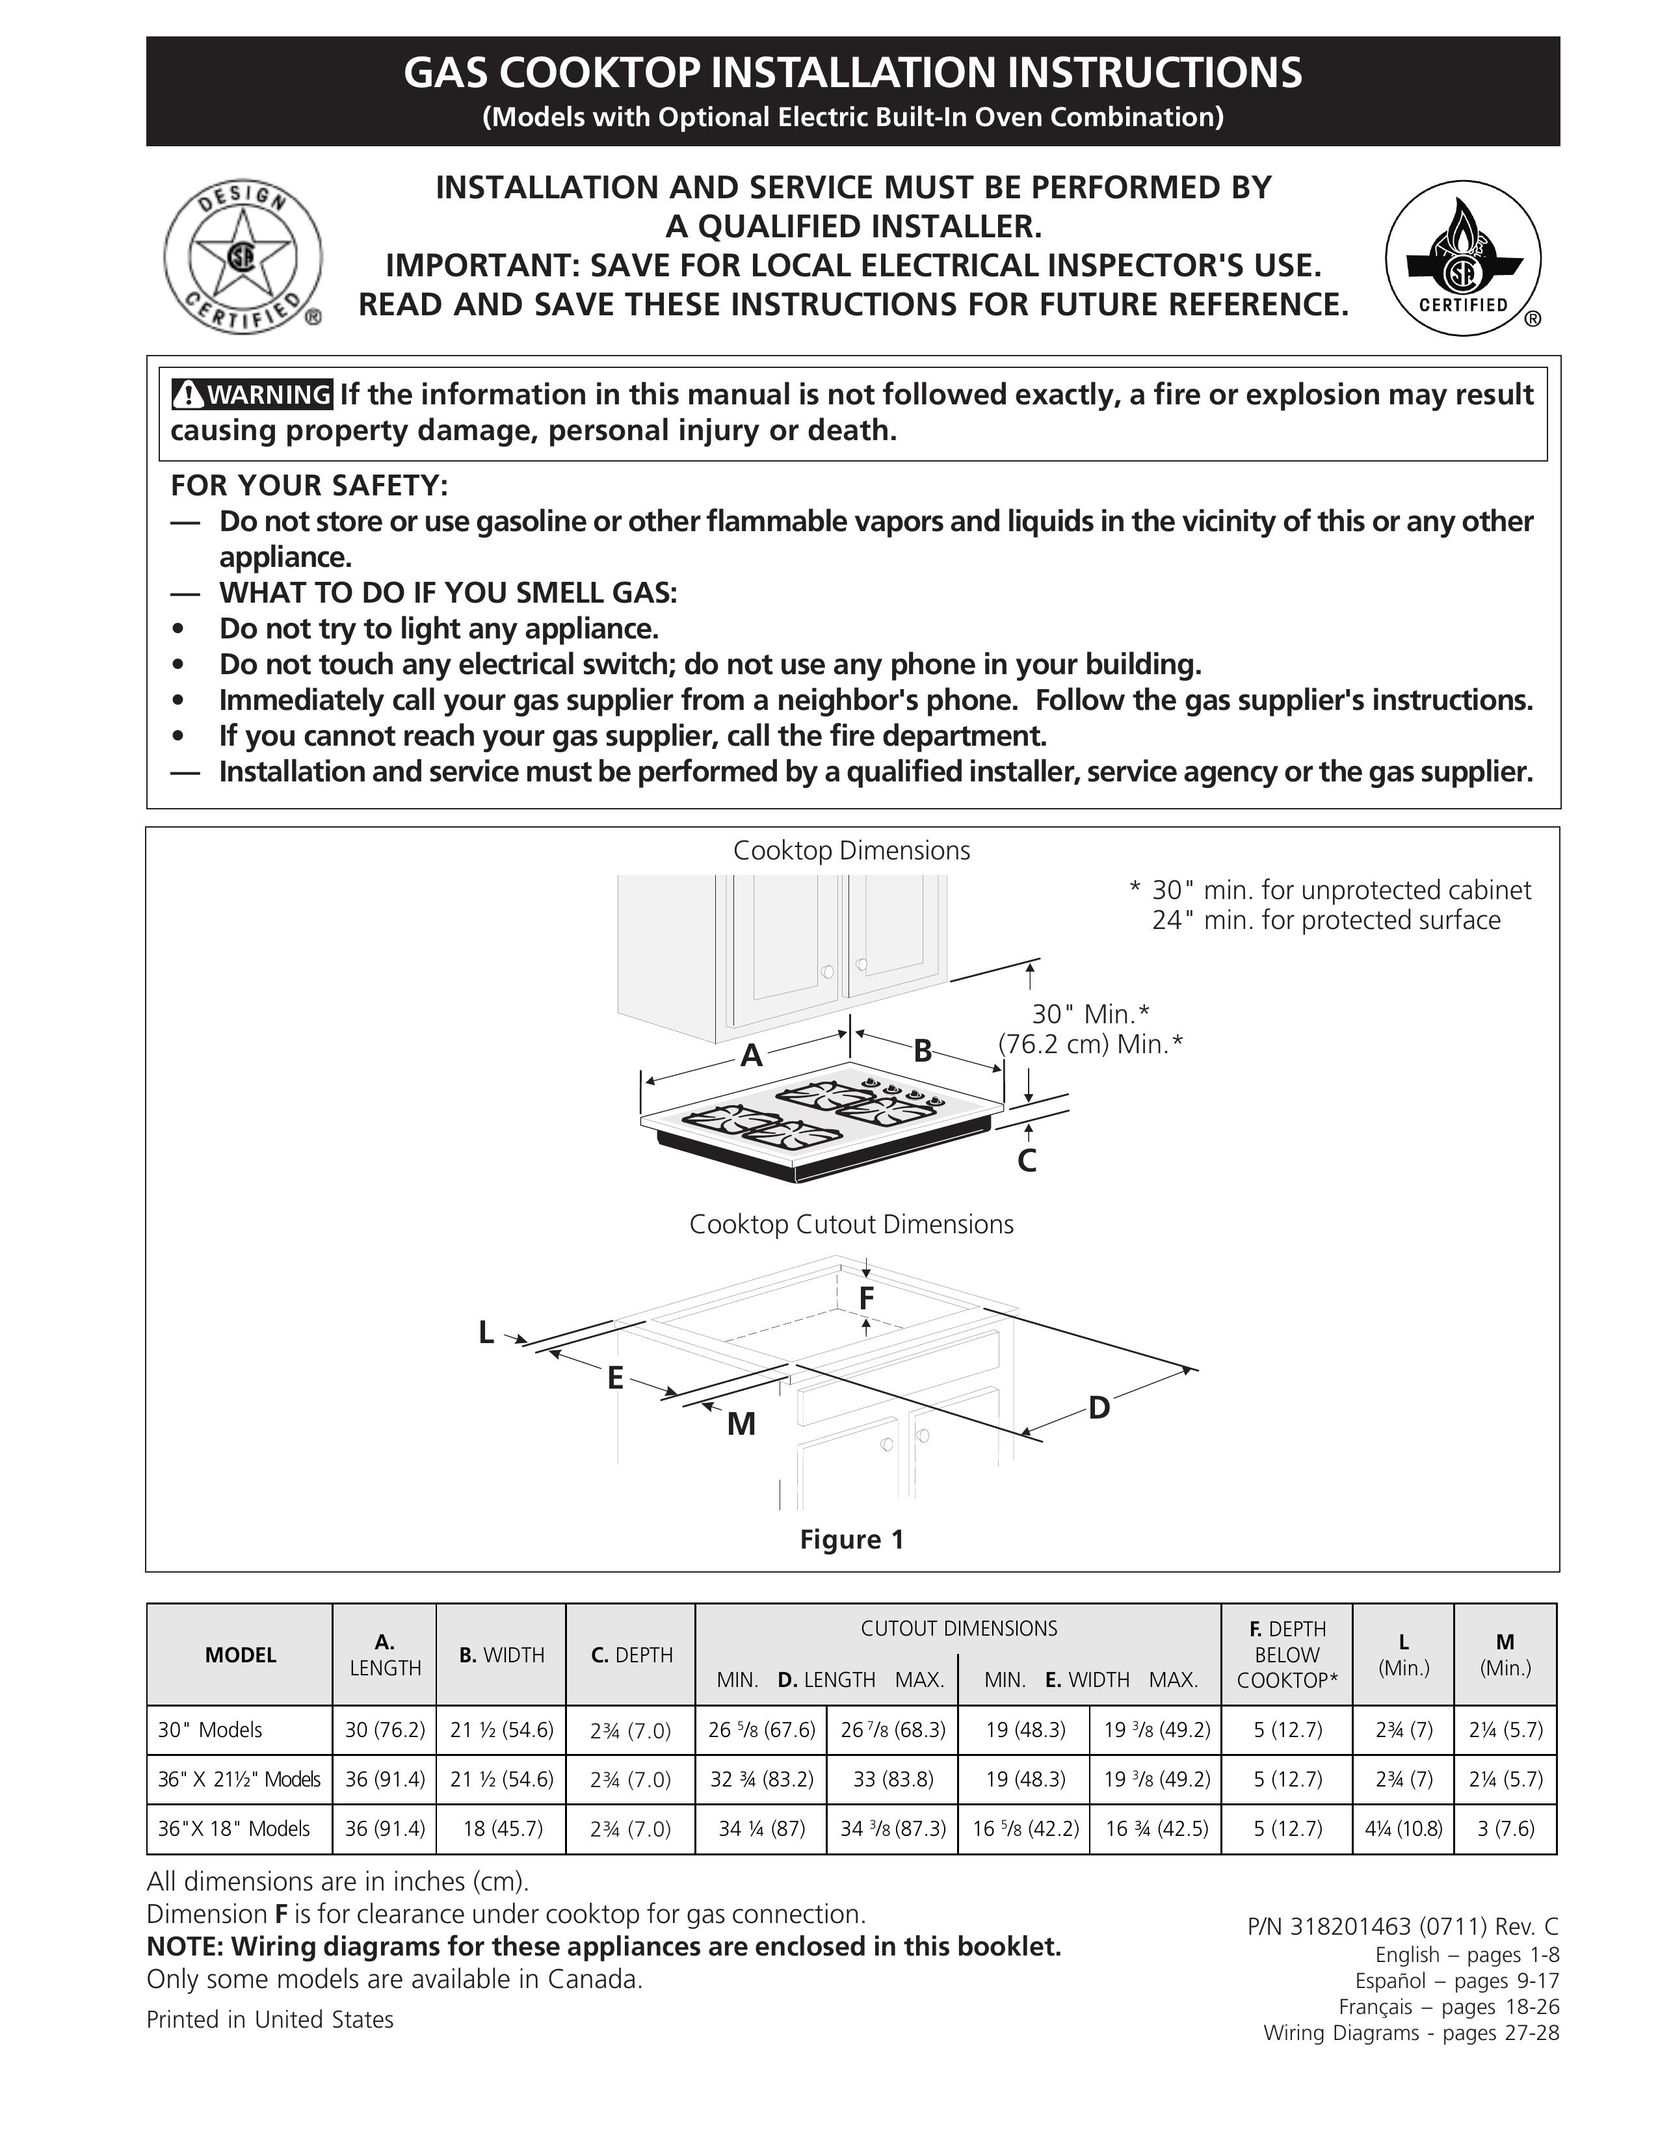 Frigidaire 318201463 (0711) Cooktop User Manual